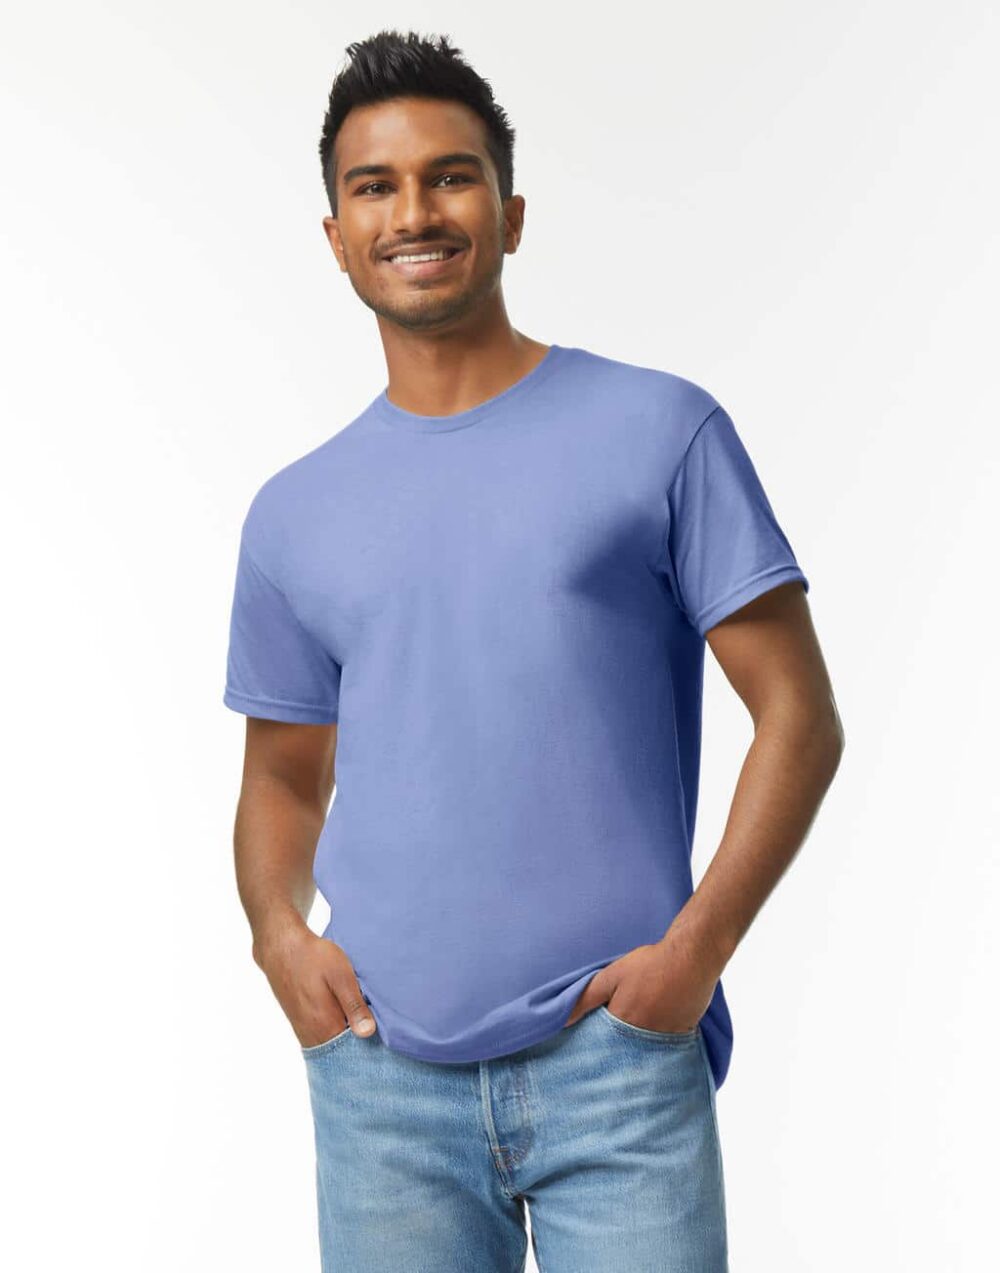 Heavy Cotton Adult T-Shirt